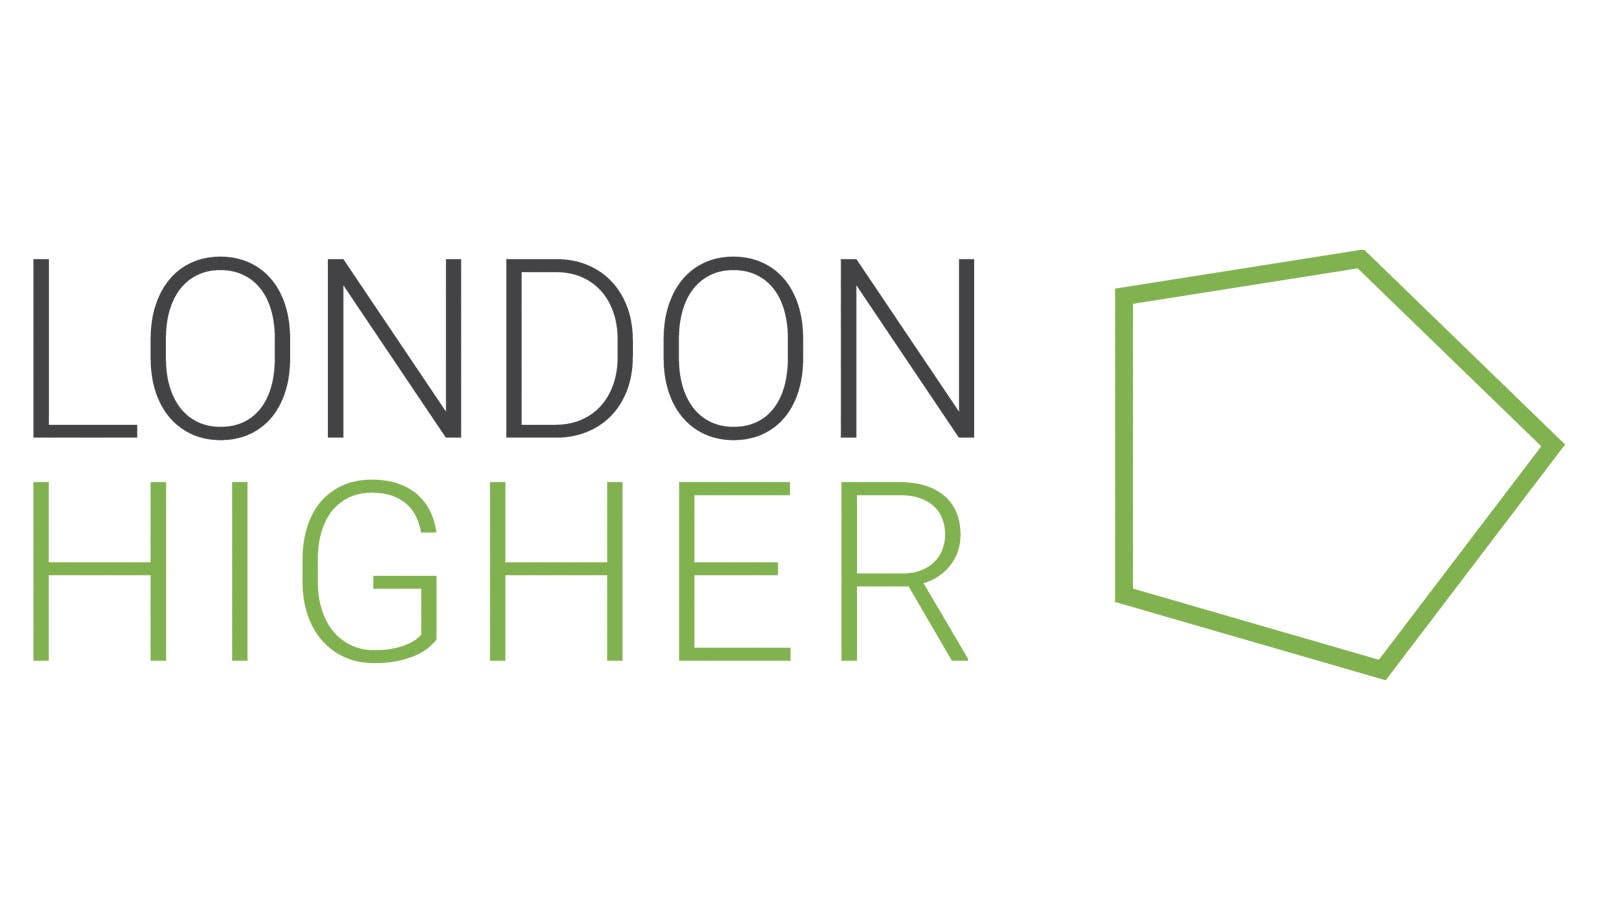 The London Higher logo